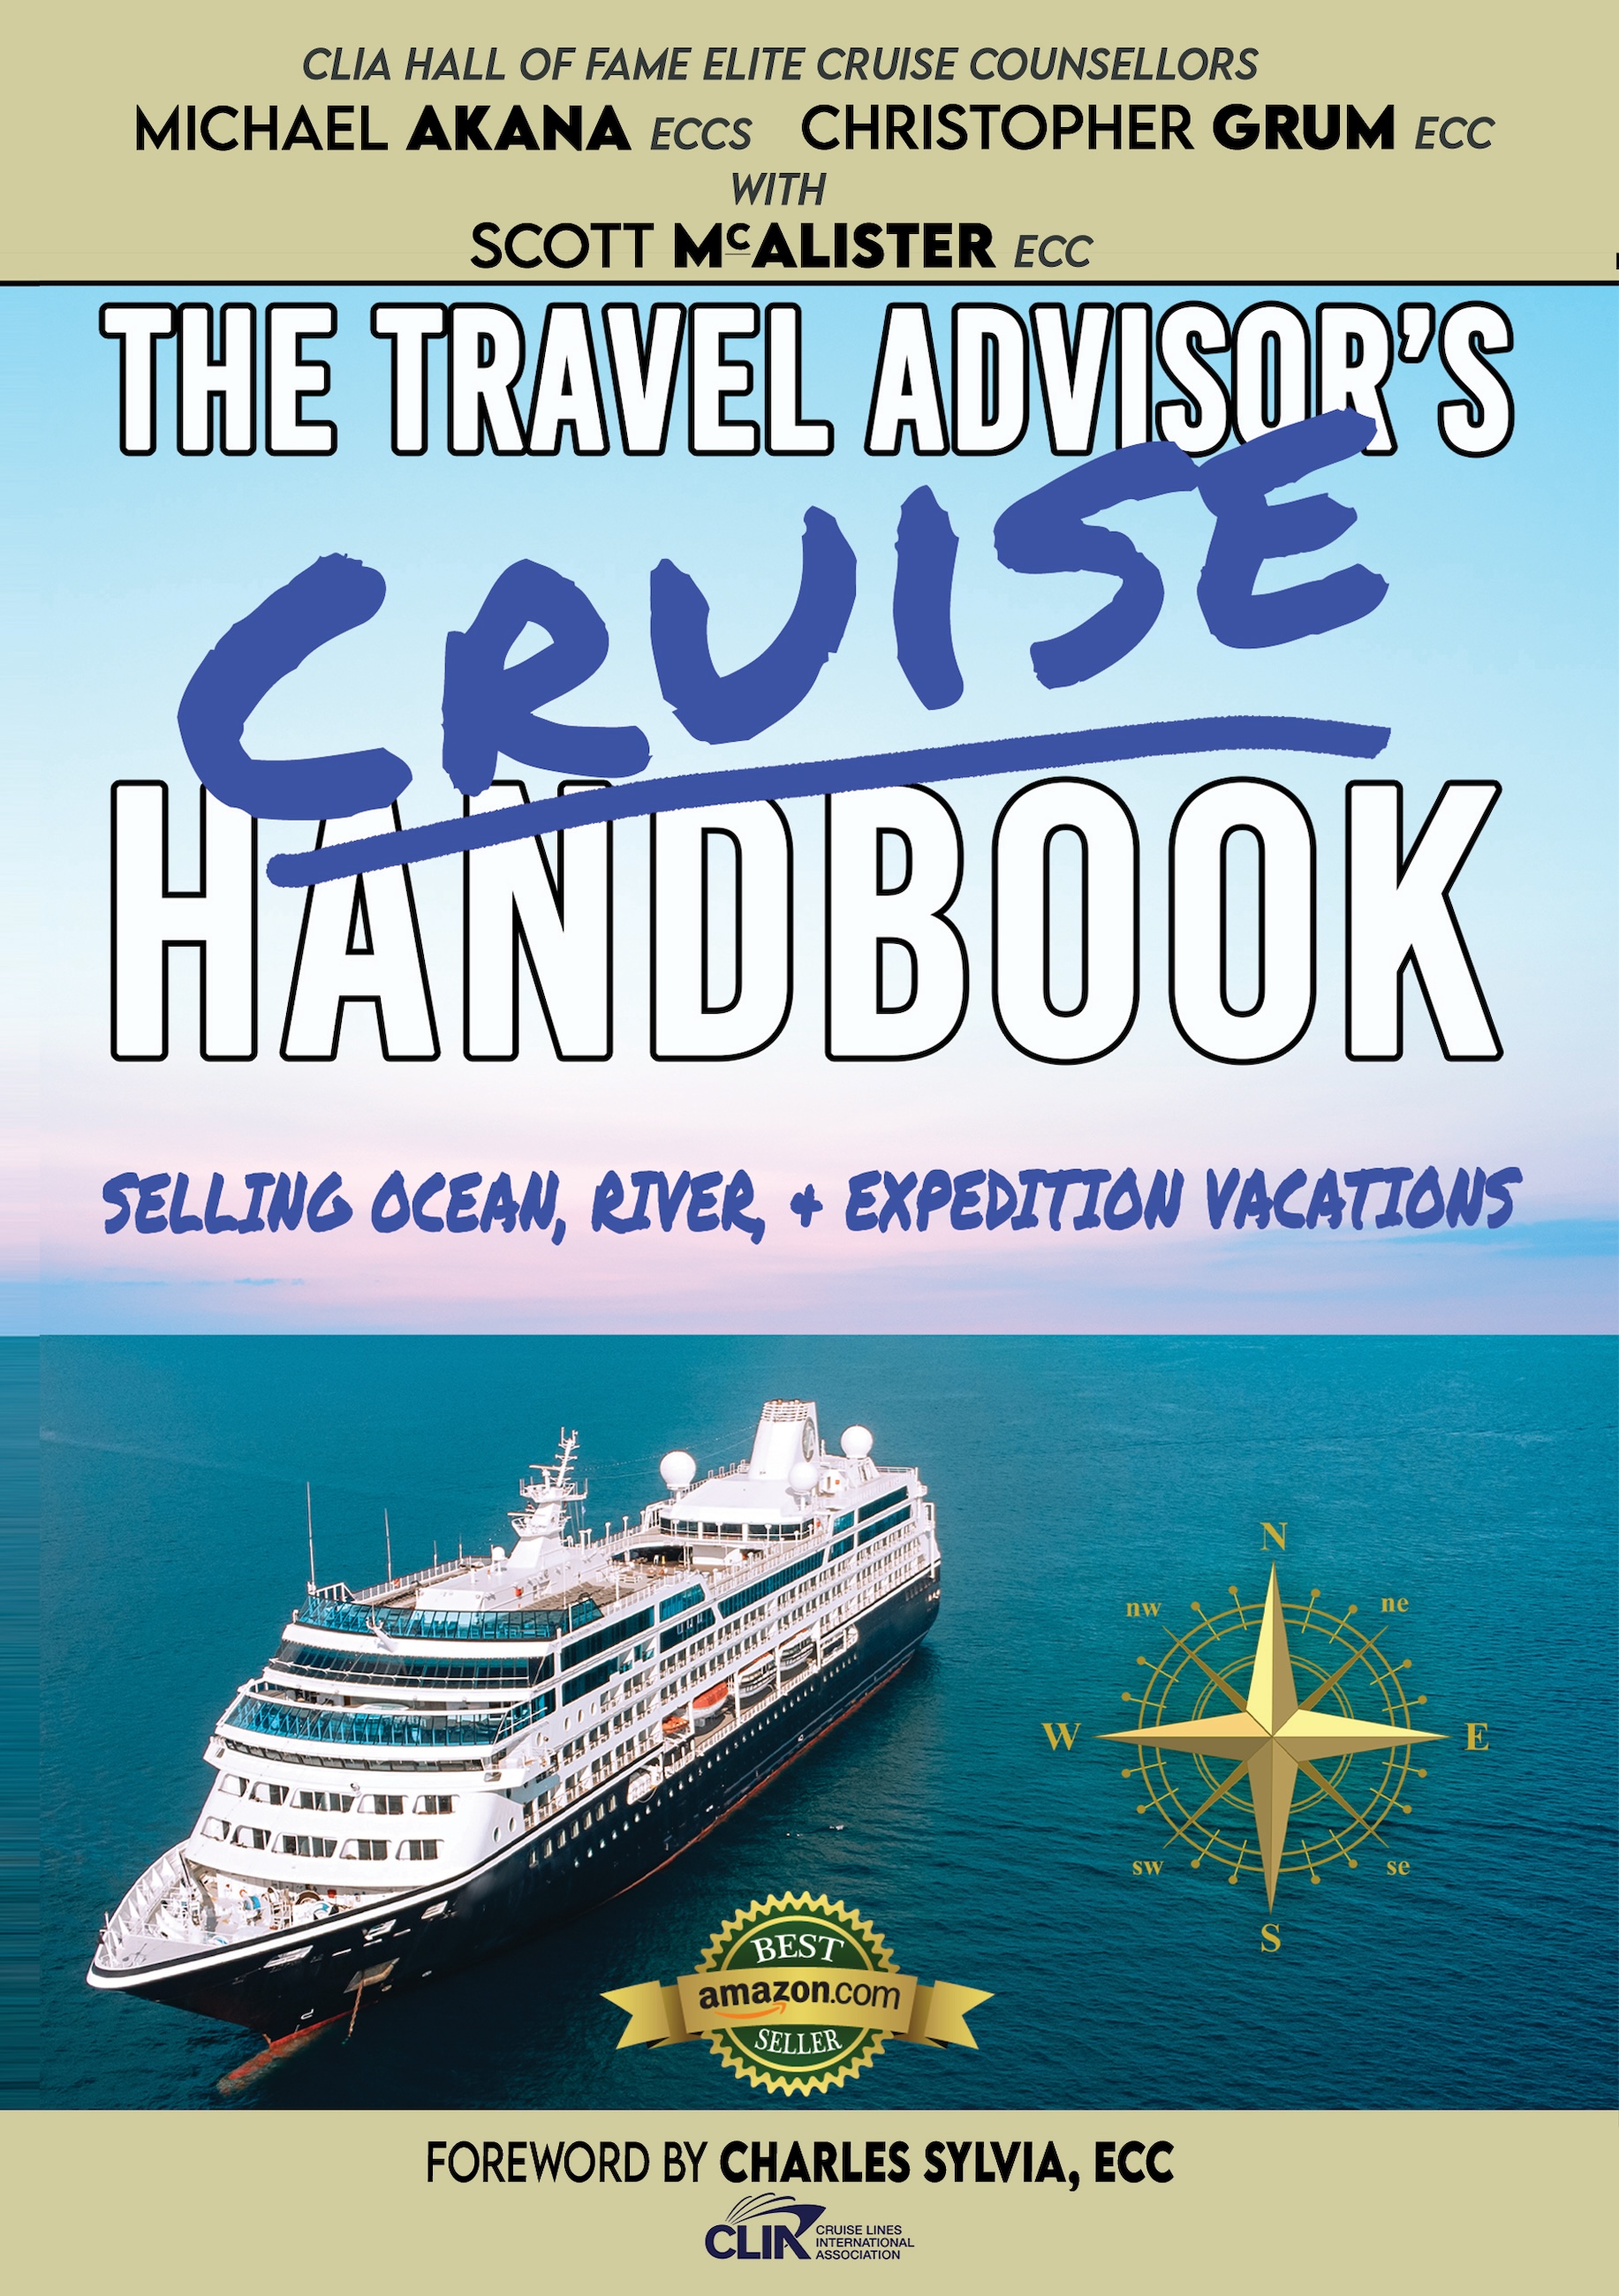 The Travel Advisor's Cruise Handbook cover